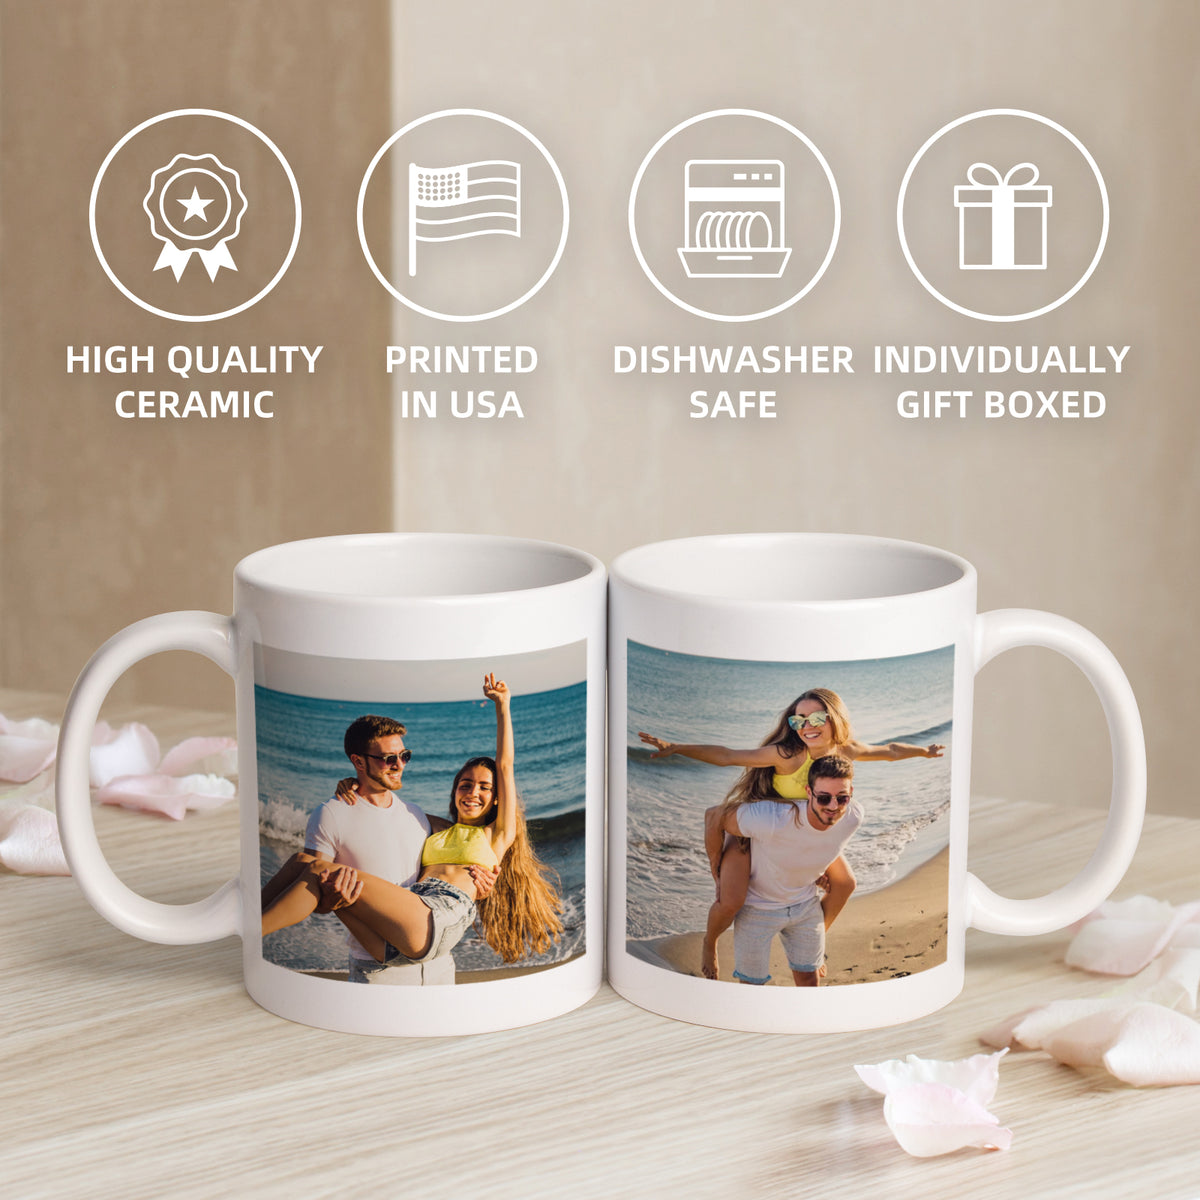 Customizedbee Couple Mug Set of 2- Ceramic Coffee Mug with Custom Photo Name Text